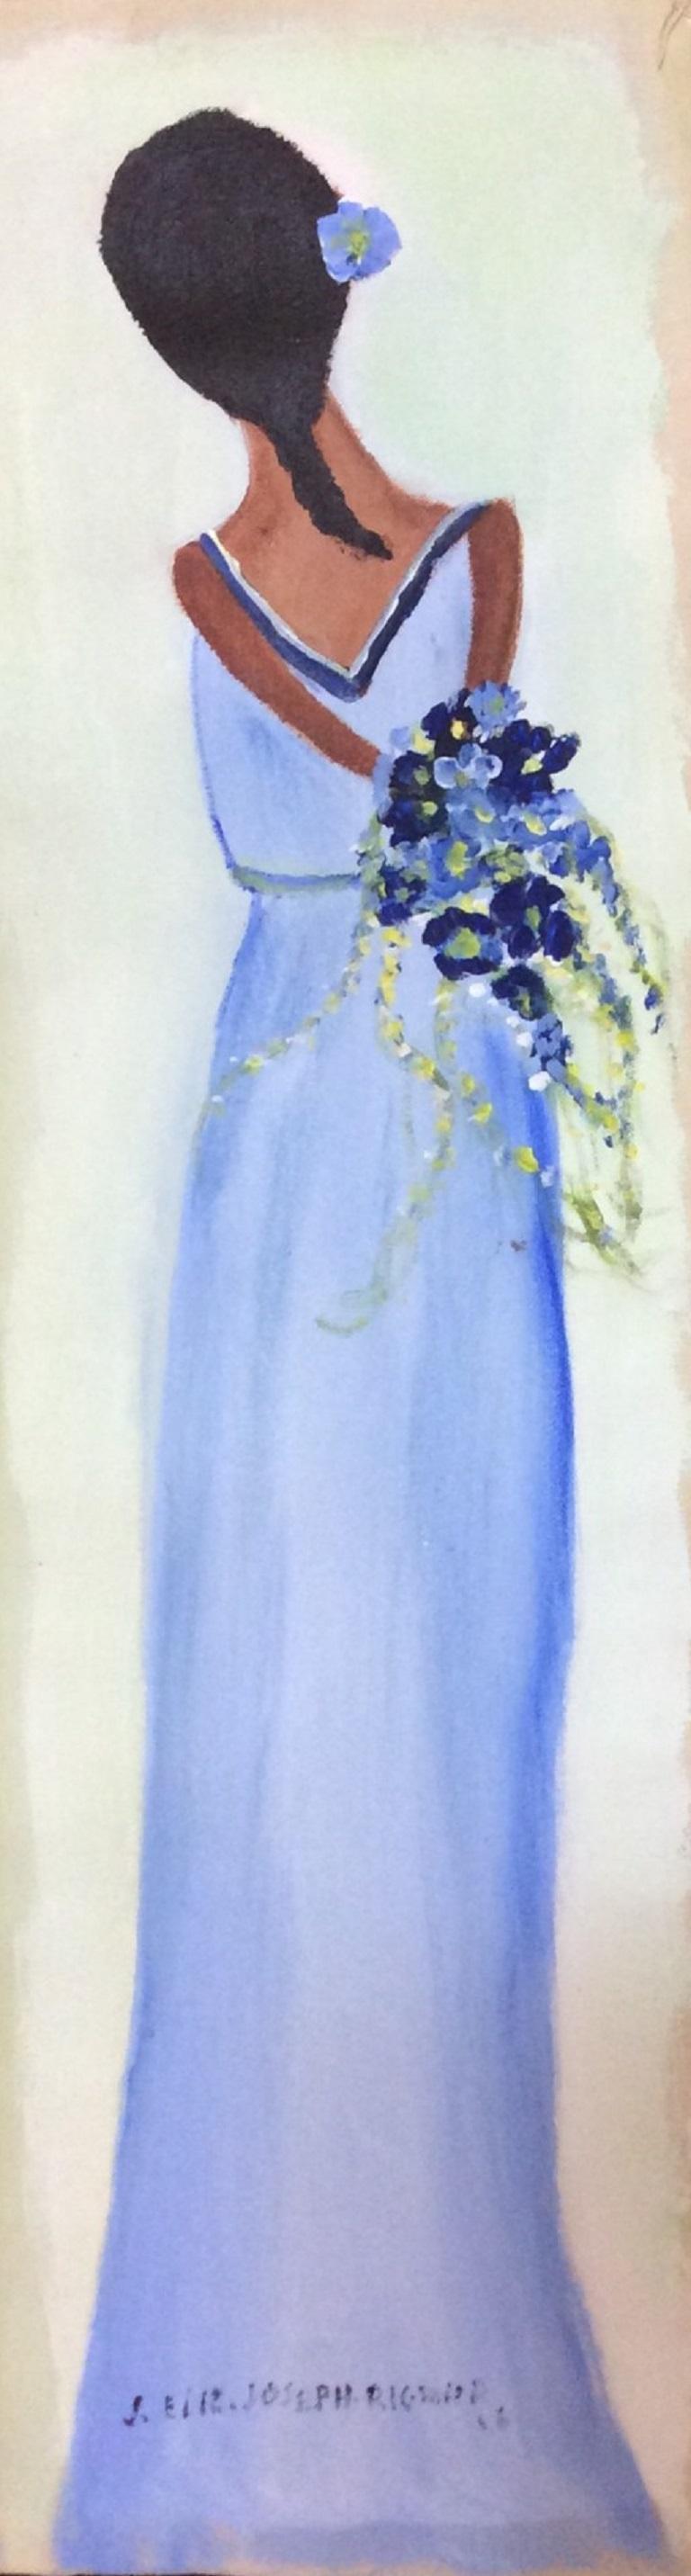 Lady in Blue #6MFN - Art by Jeanne Elie Joseph Rigaud